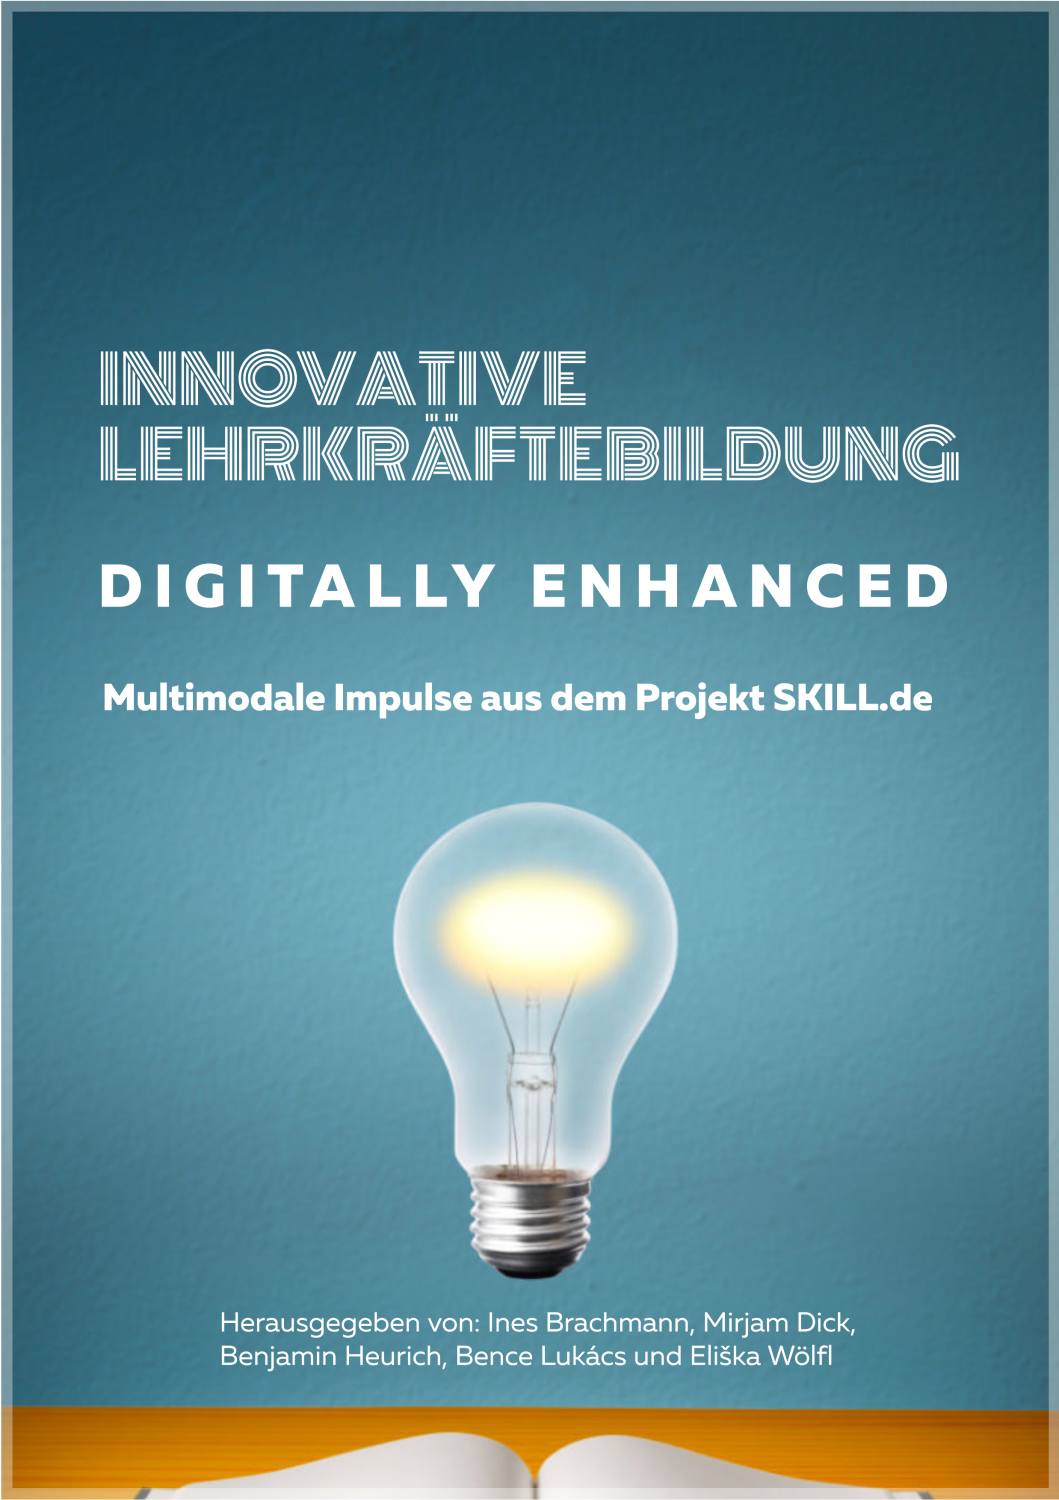 Titelbild für Innovative Lehrkräftebildung, digitally enhanced.